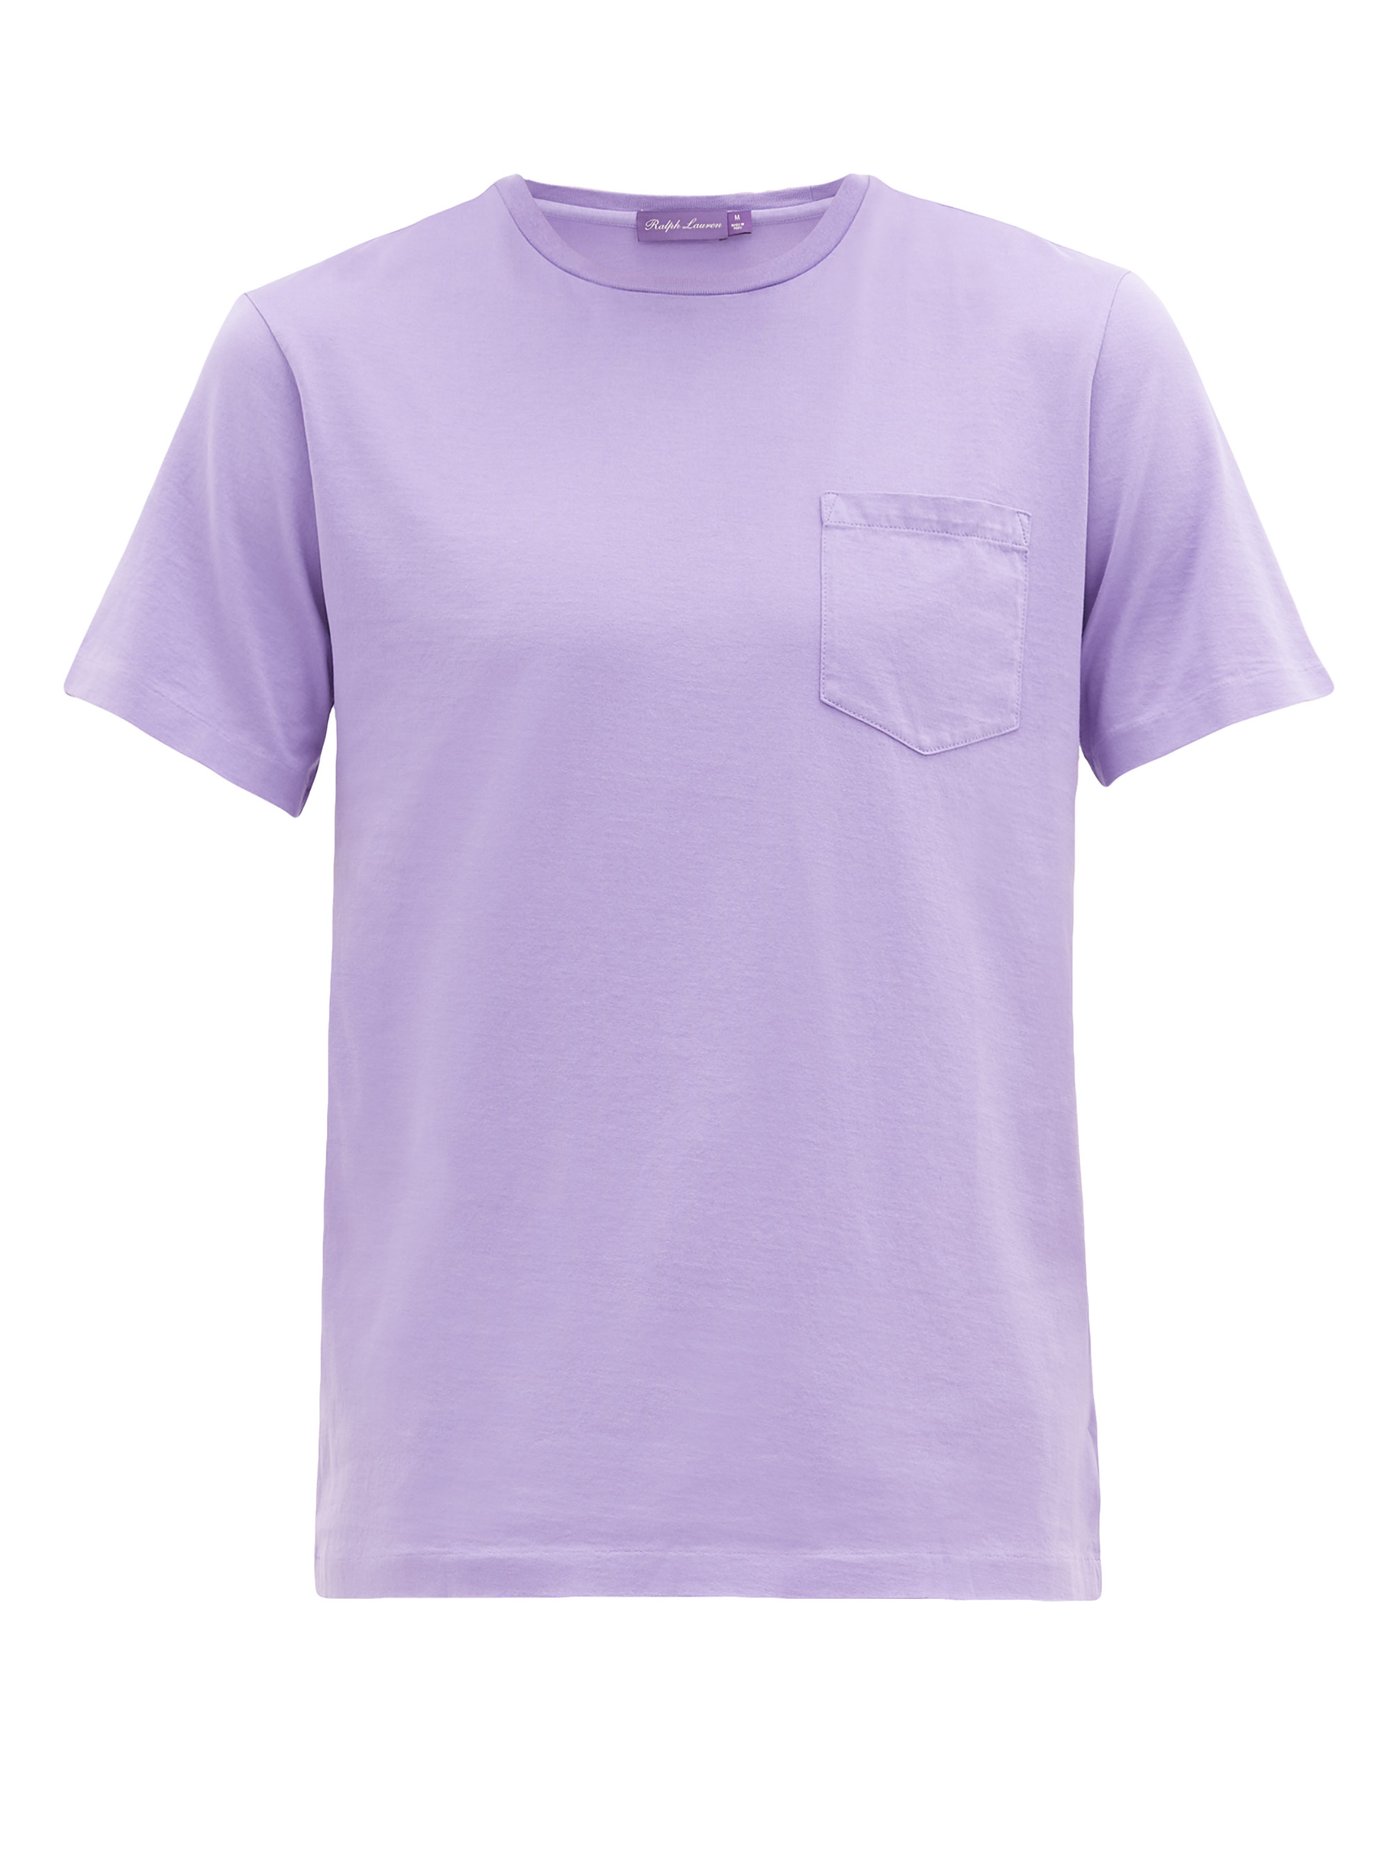 ralph lauren purple label t shirt